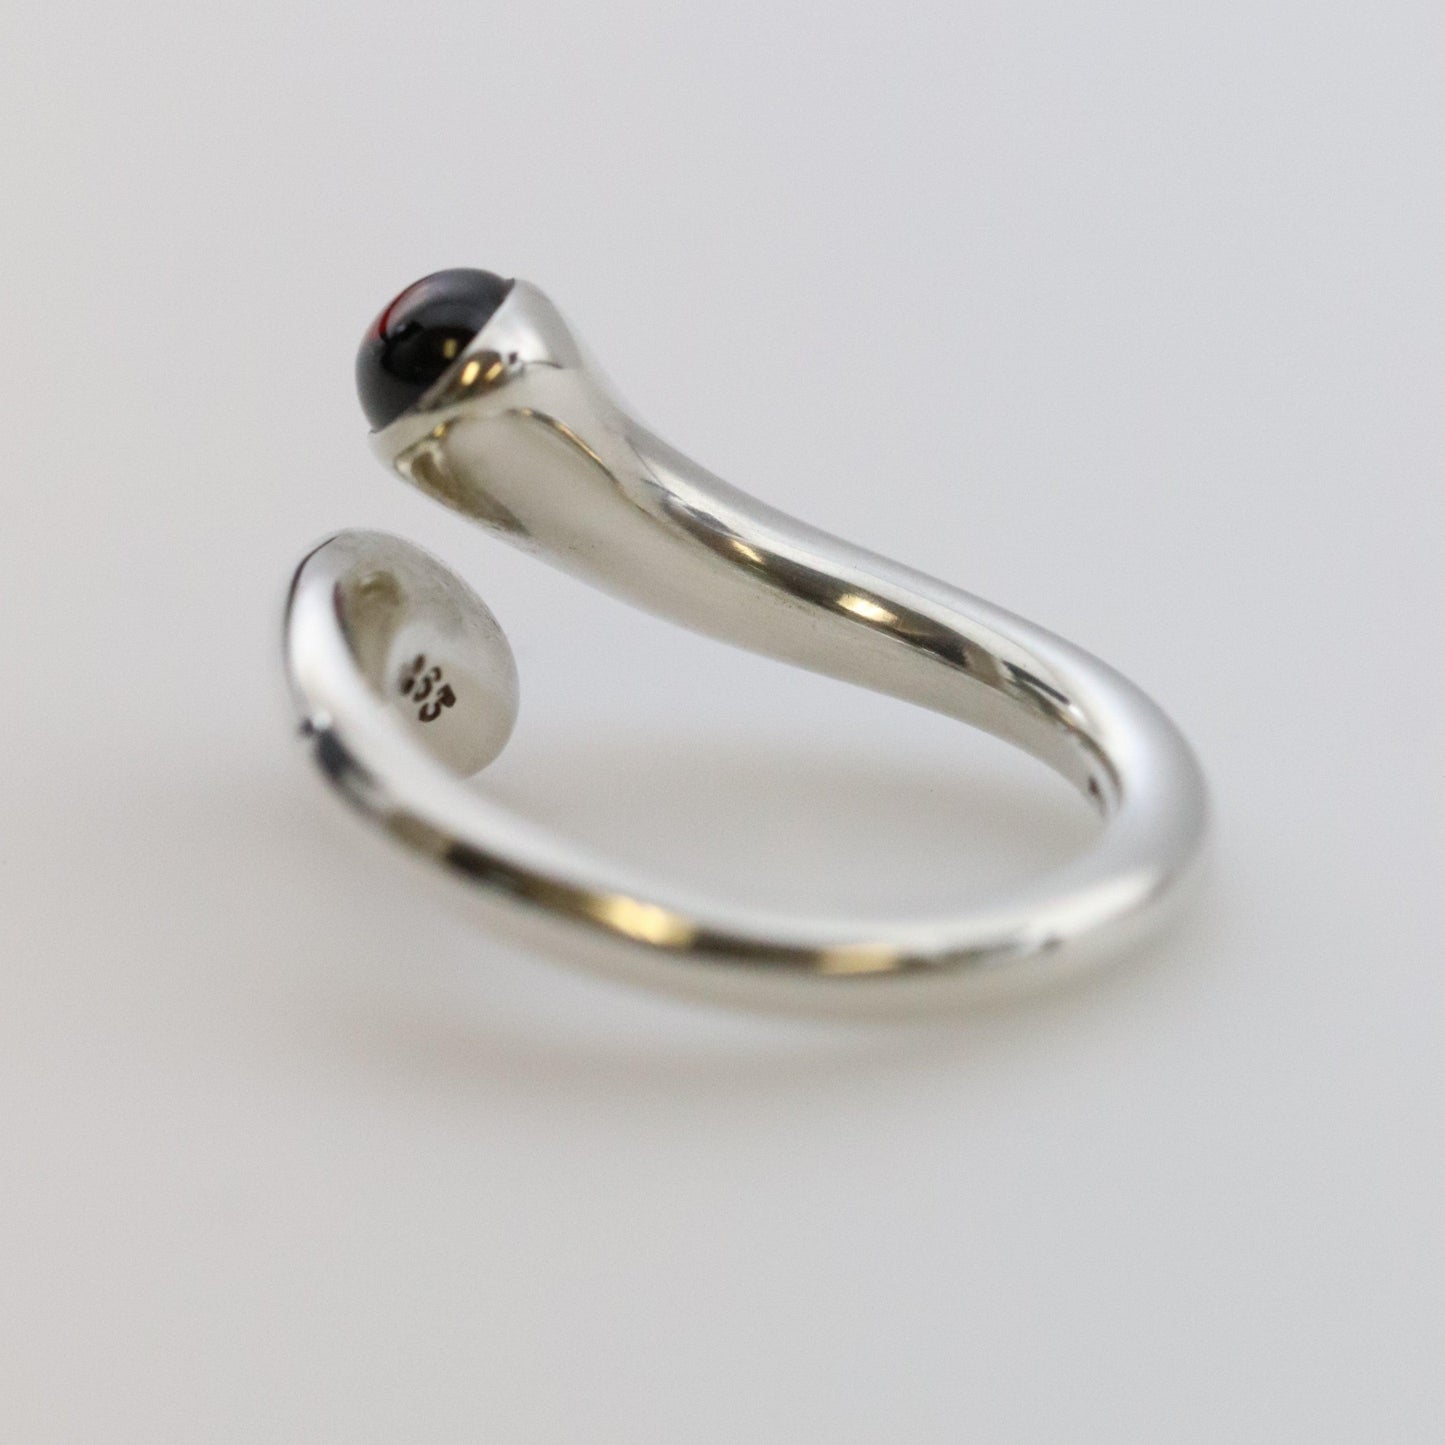 Vintage Georg Jensen Jewelry | Carnival Ring with Garnet and Quartz 263 - Carmel Fine Silver Jewelry